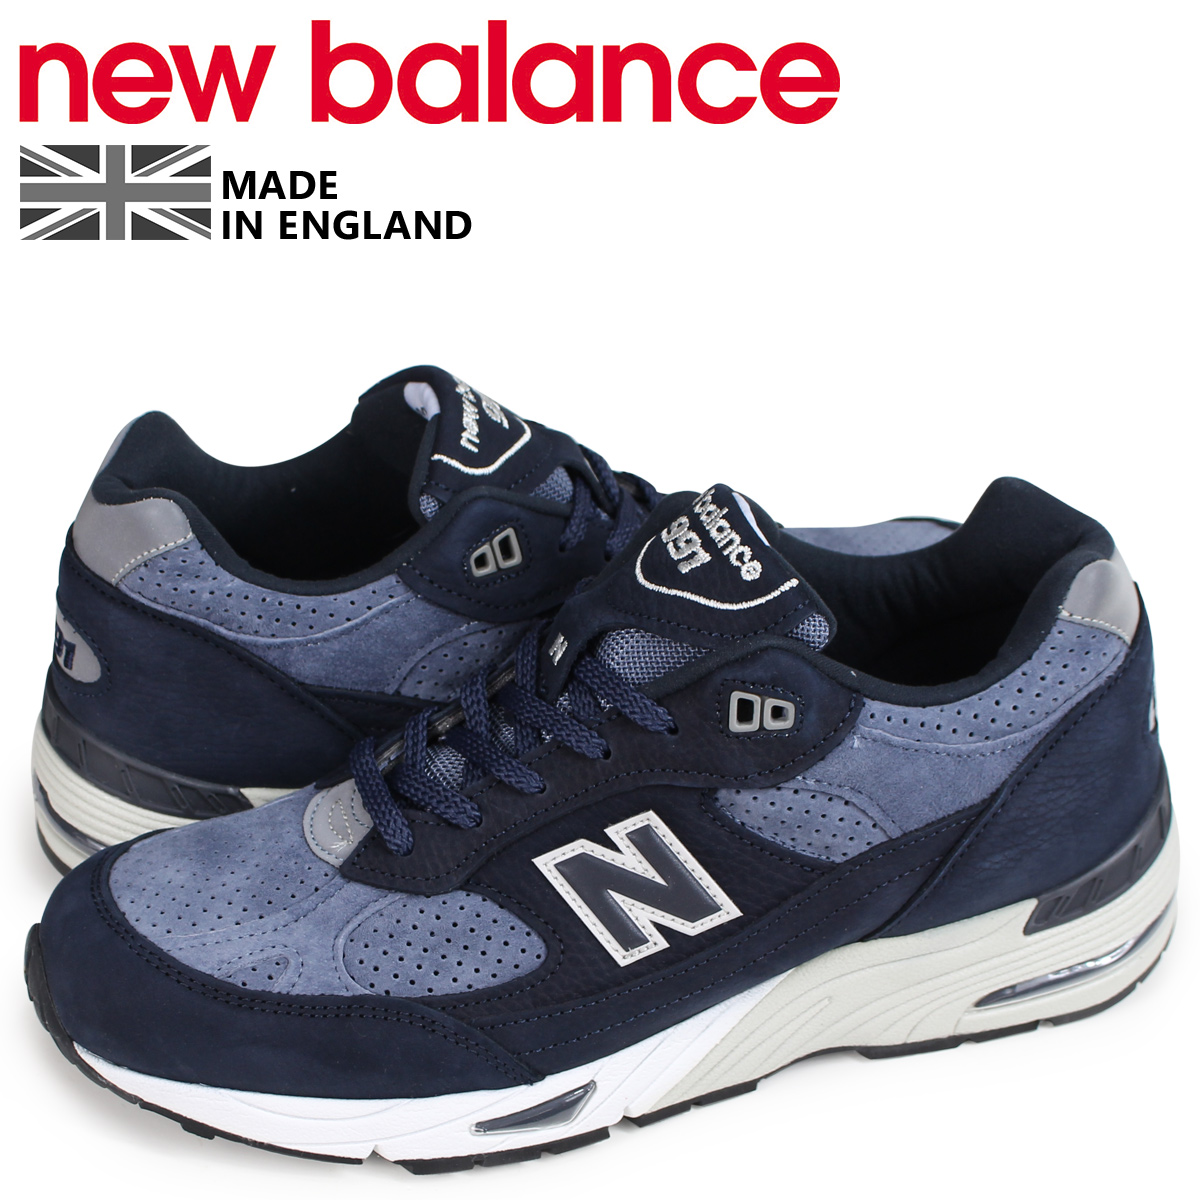 new balance uk online store